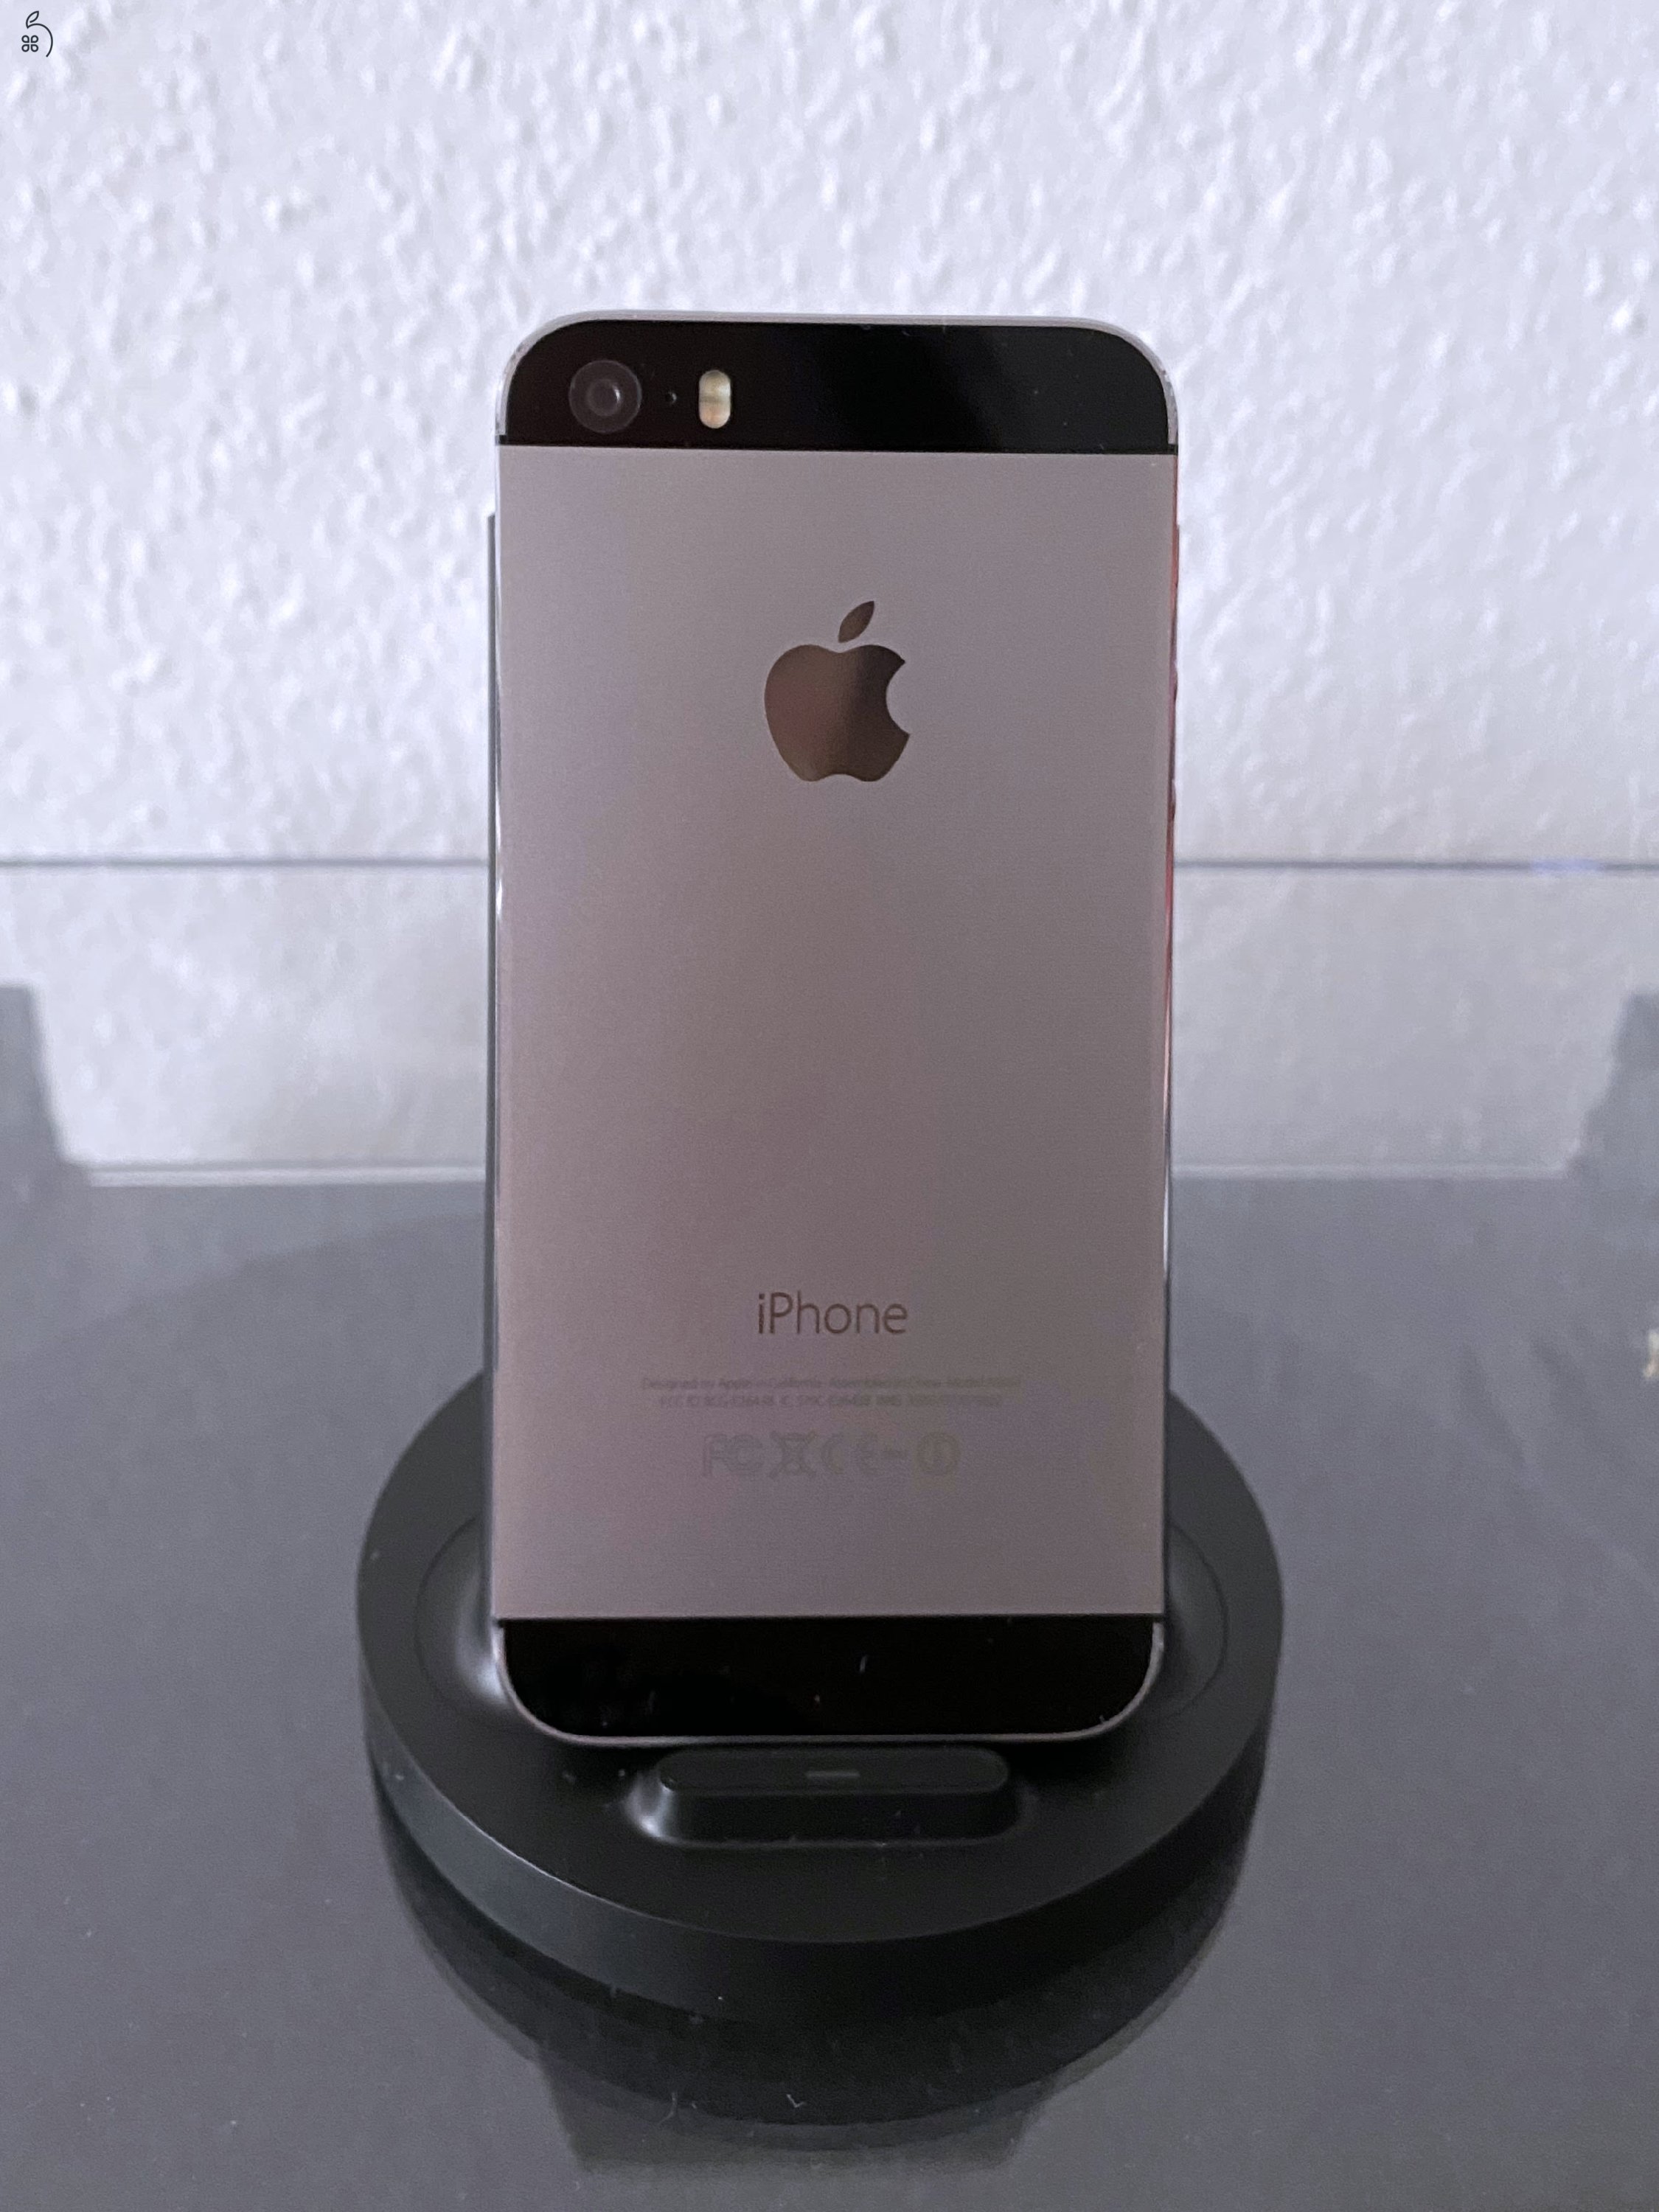 Apple Iphone 5S 16GB Space Gray